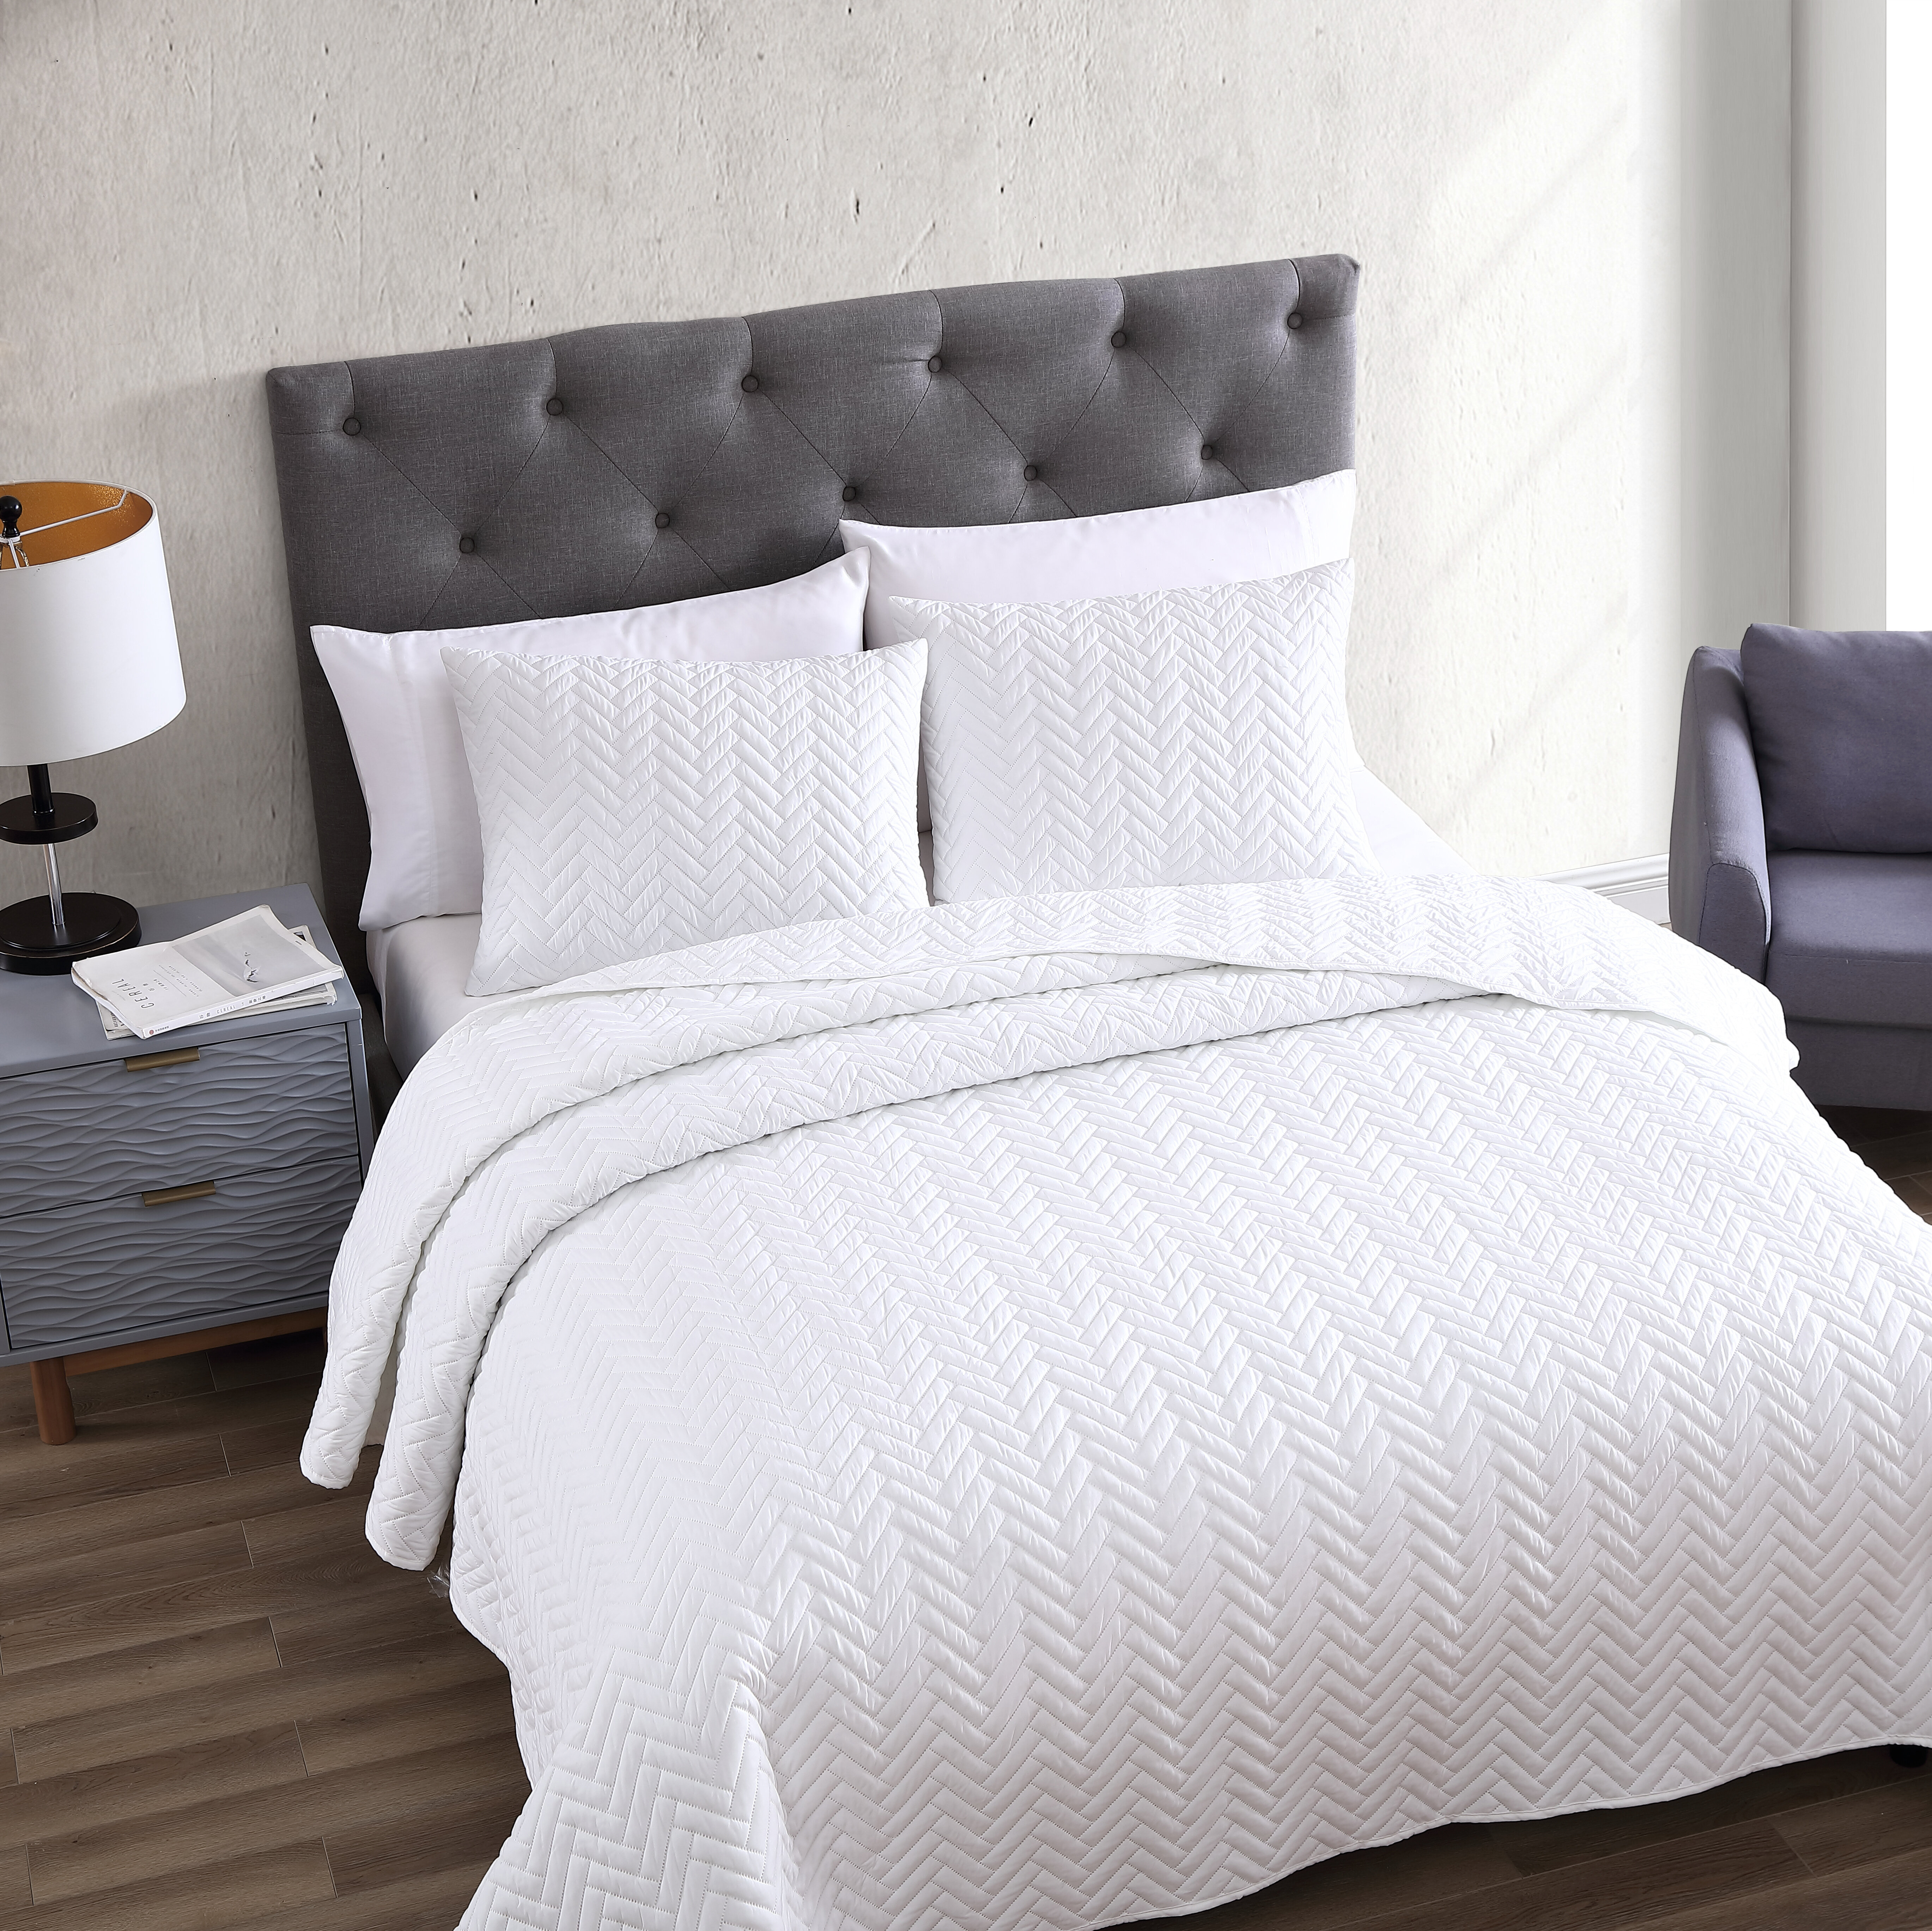 Details about   Comforter Set Blue Queen Coastal Bedding Cover Sham Bed Skirt Decorative Pillows 